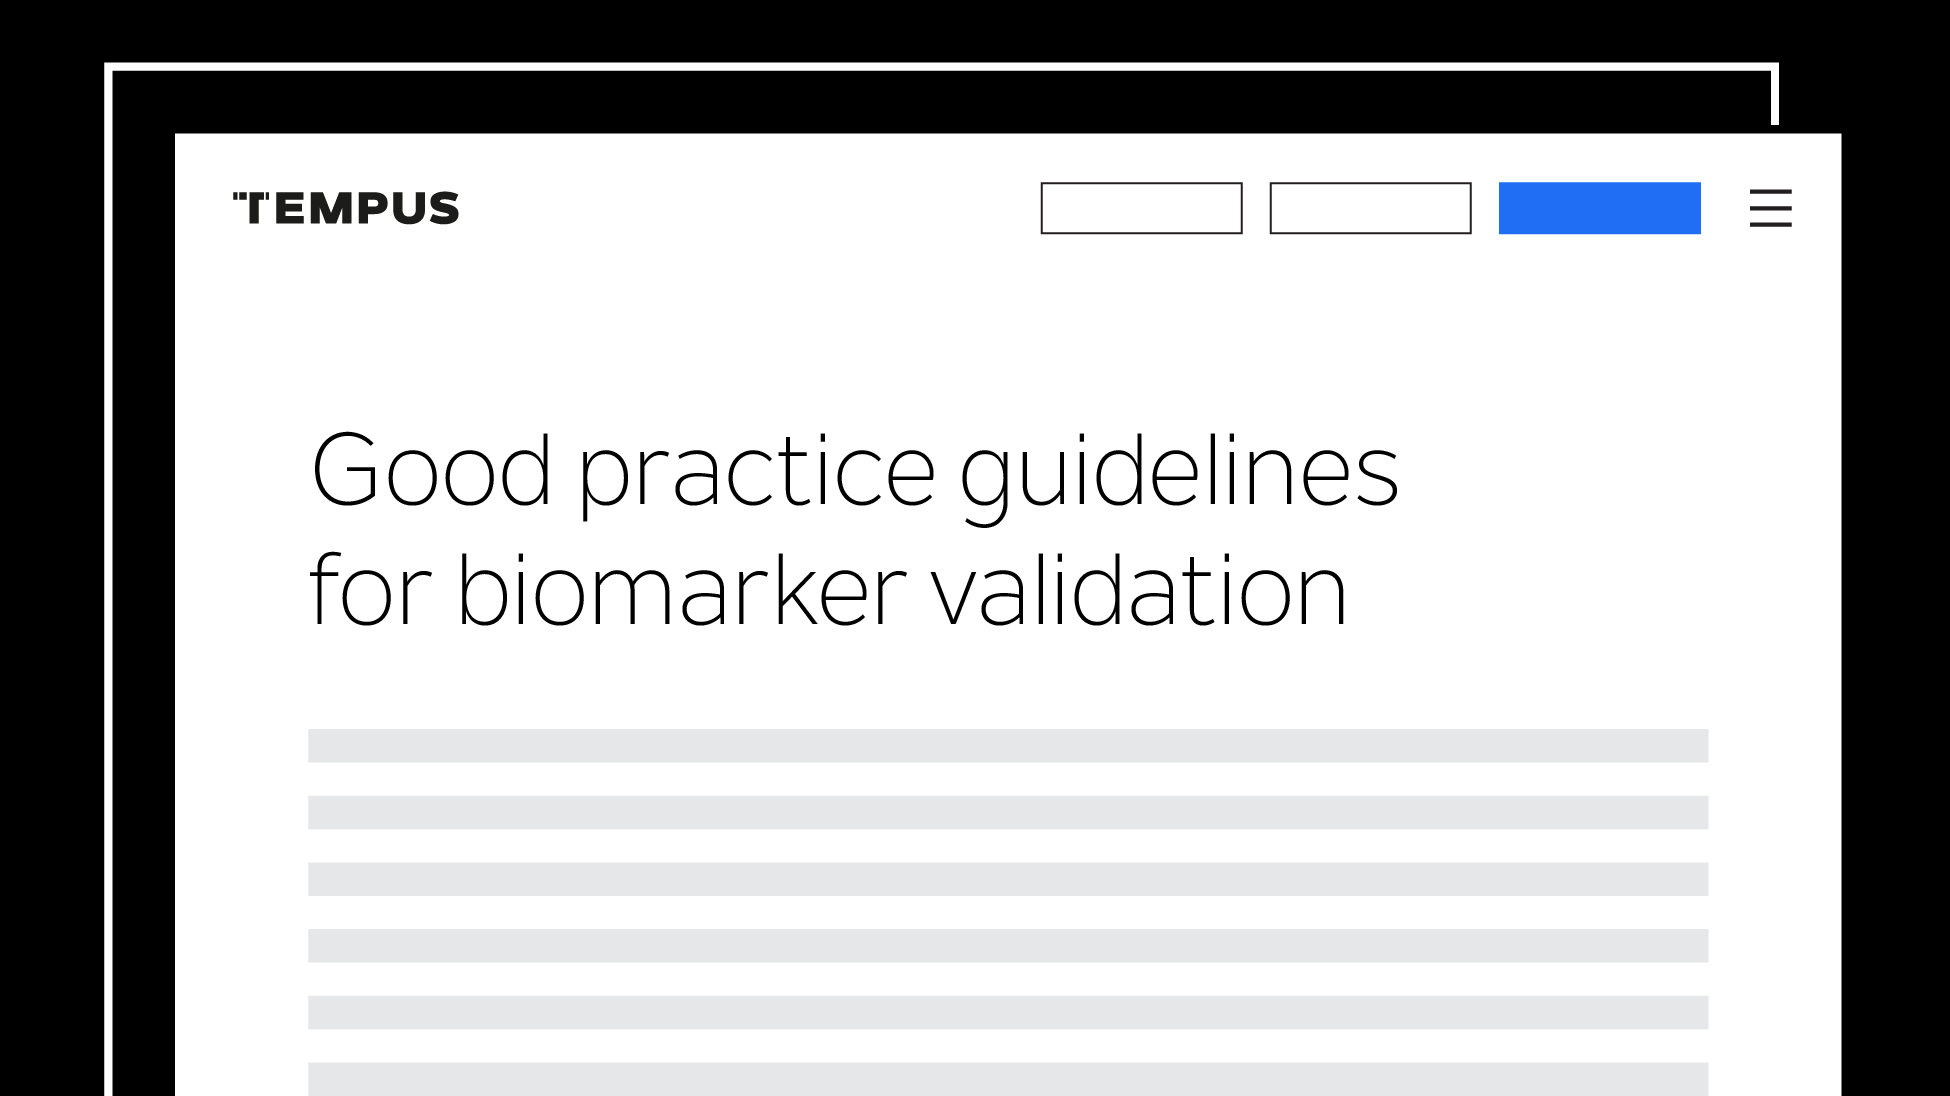 Good practice guidelines for biomarker validation